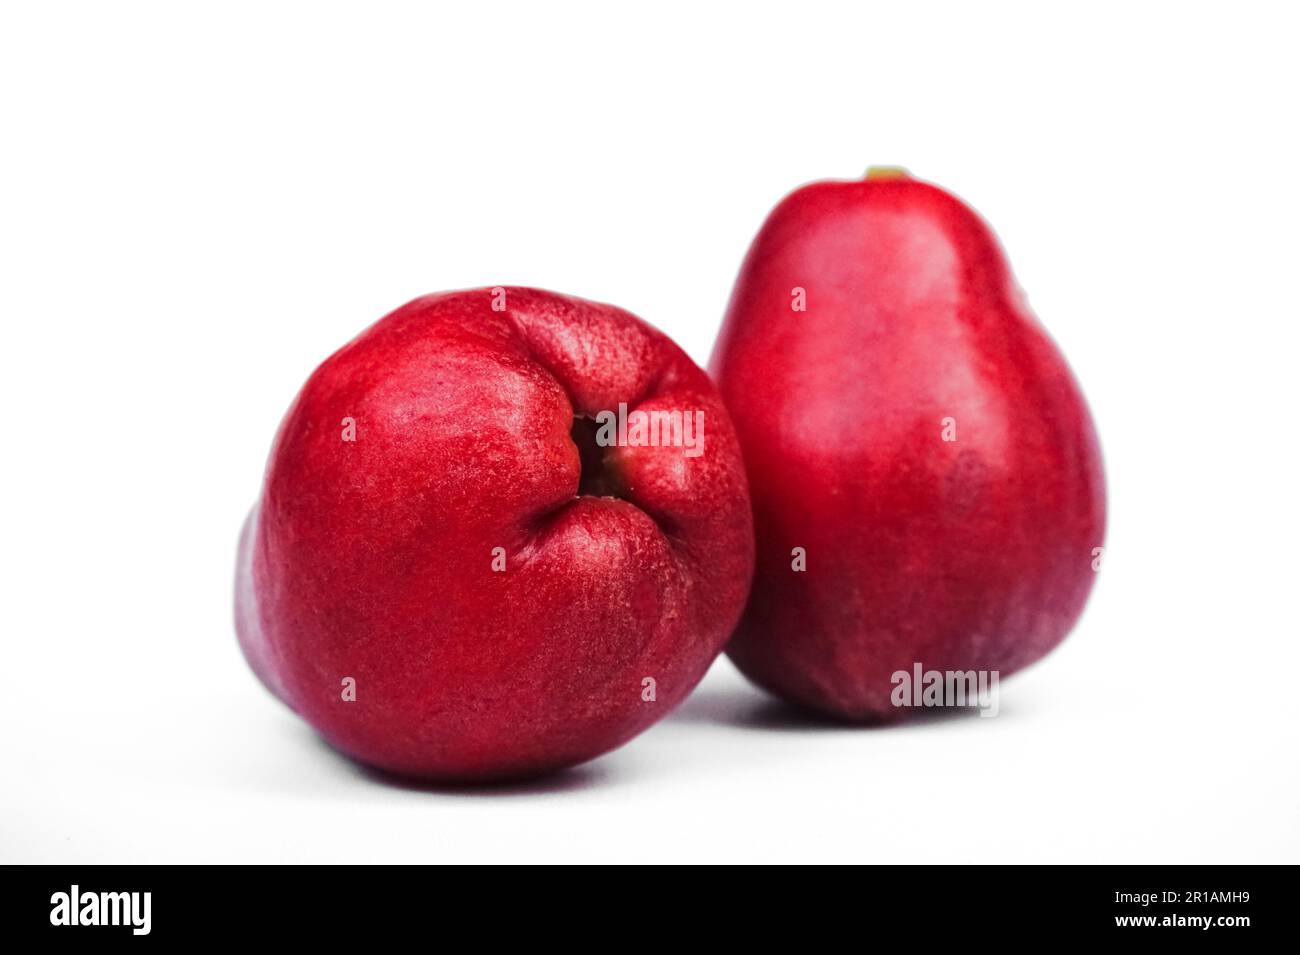 Rose apples isolated on white background Stock Photo